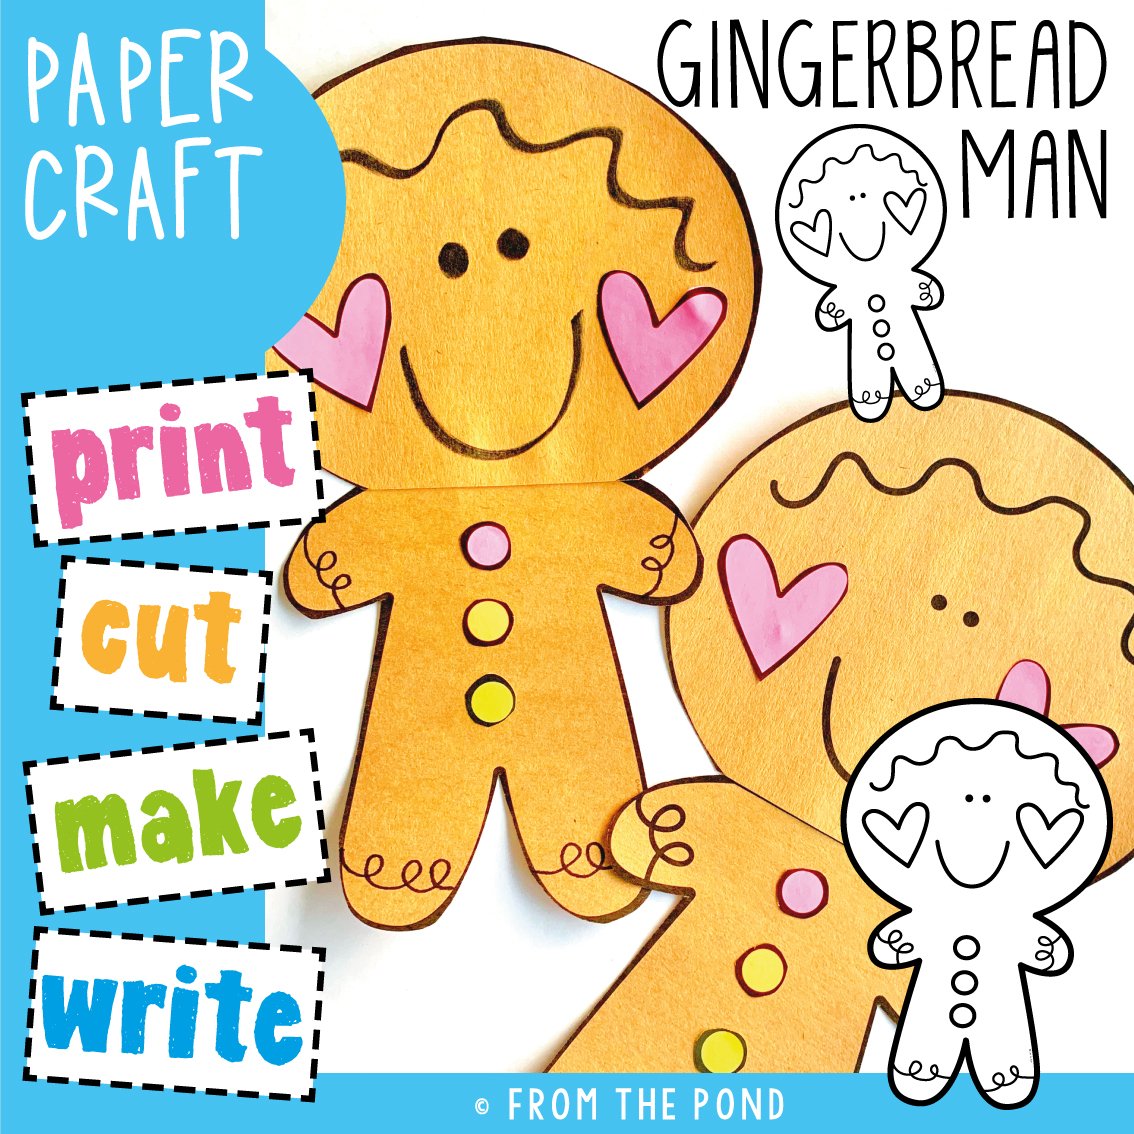 gingerbread-man-craft-pic-01.jpg